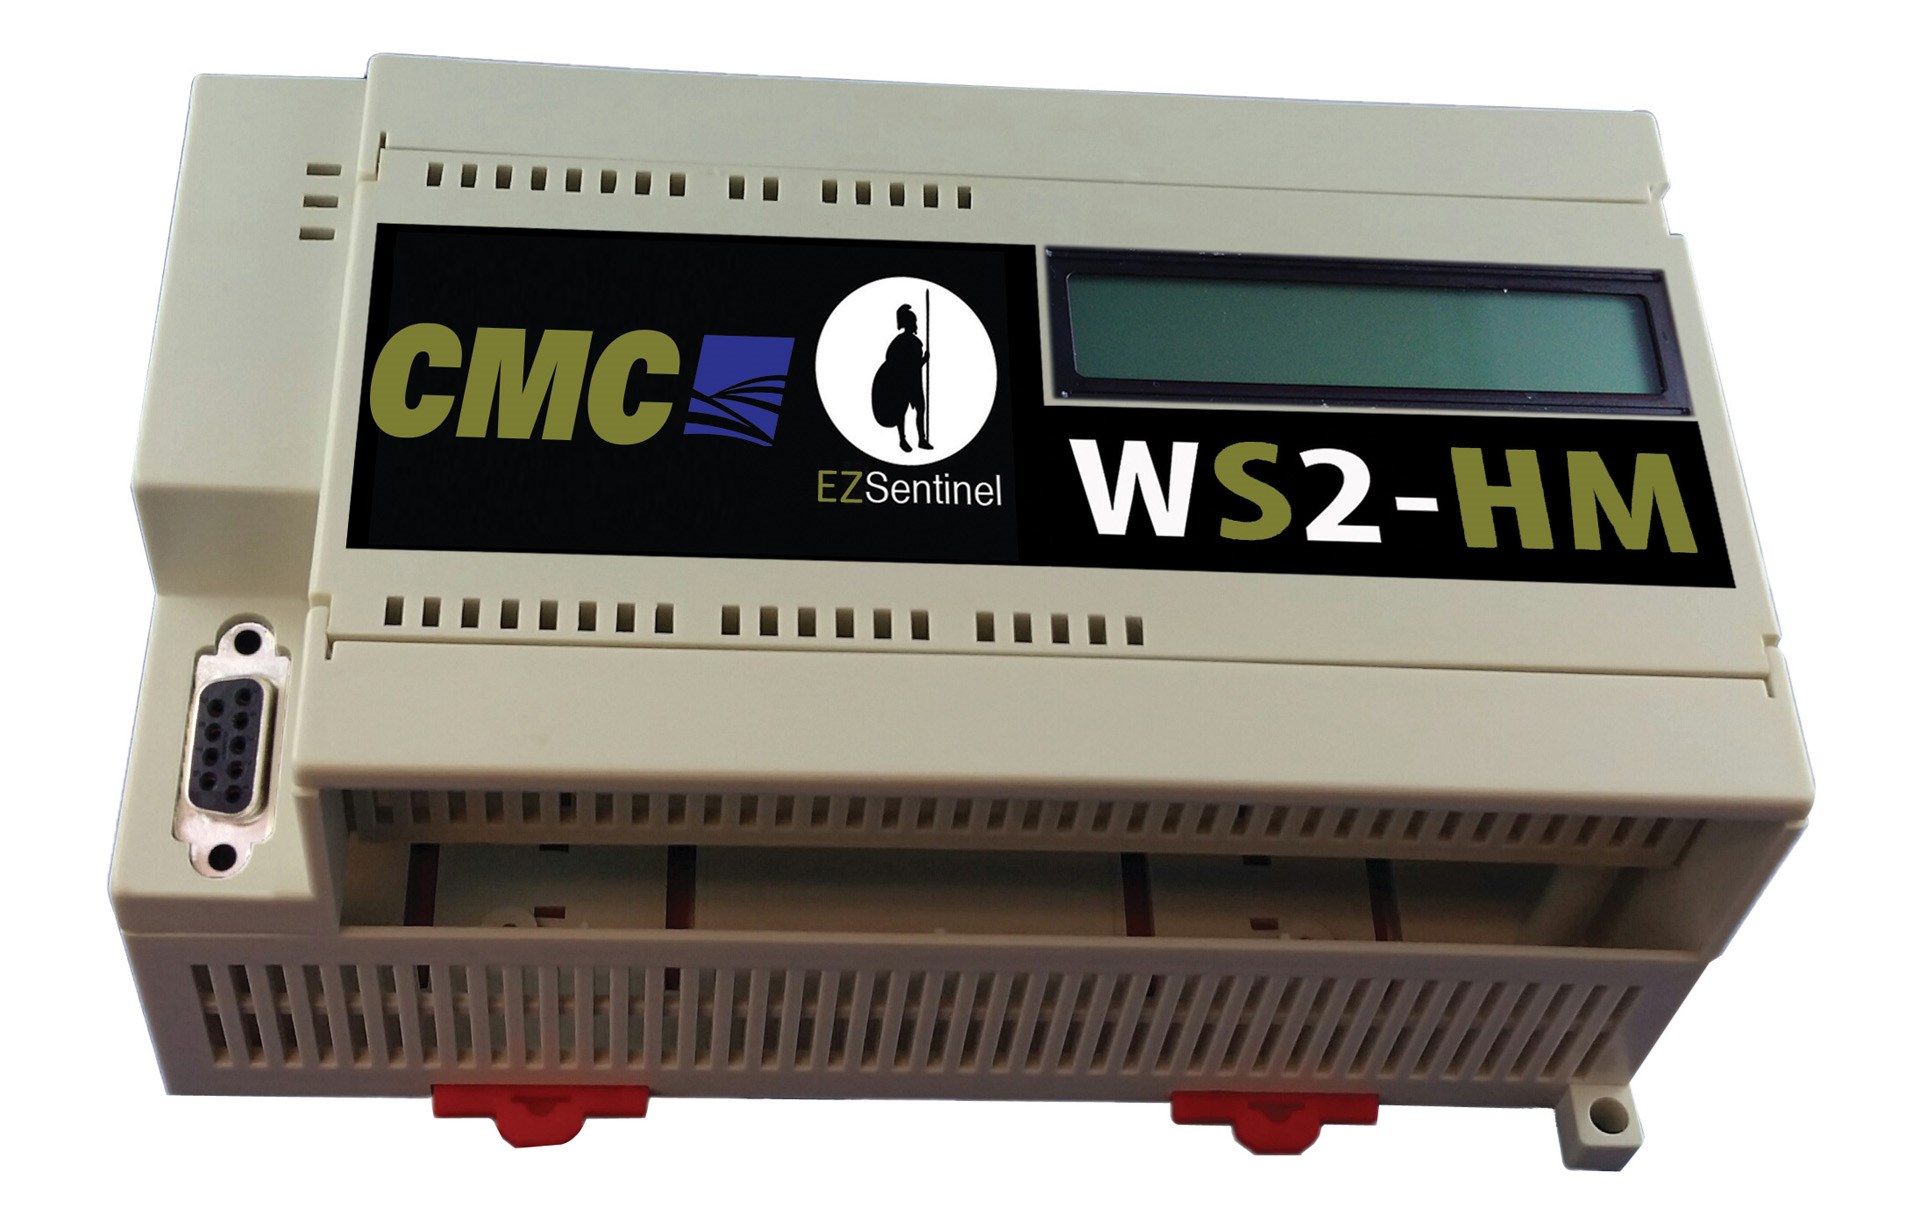 CMC HazMon-In-A-Box™ Kits